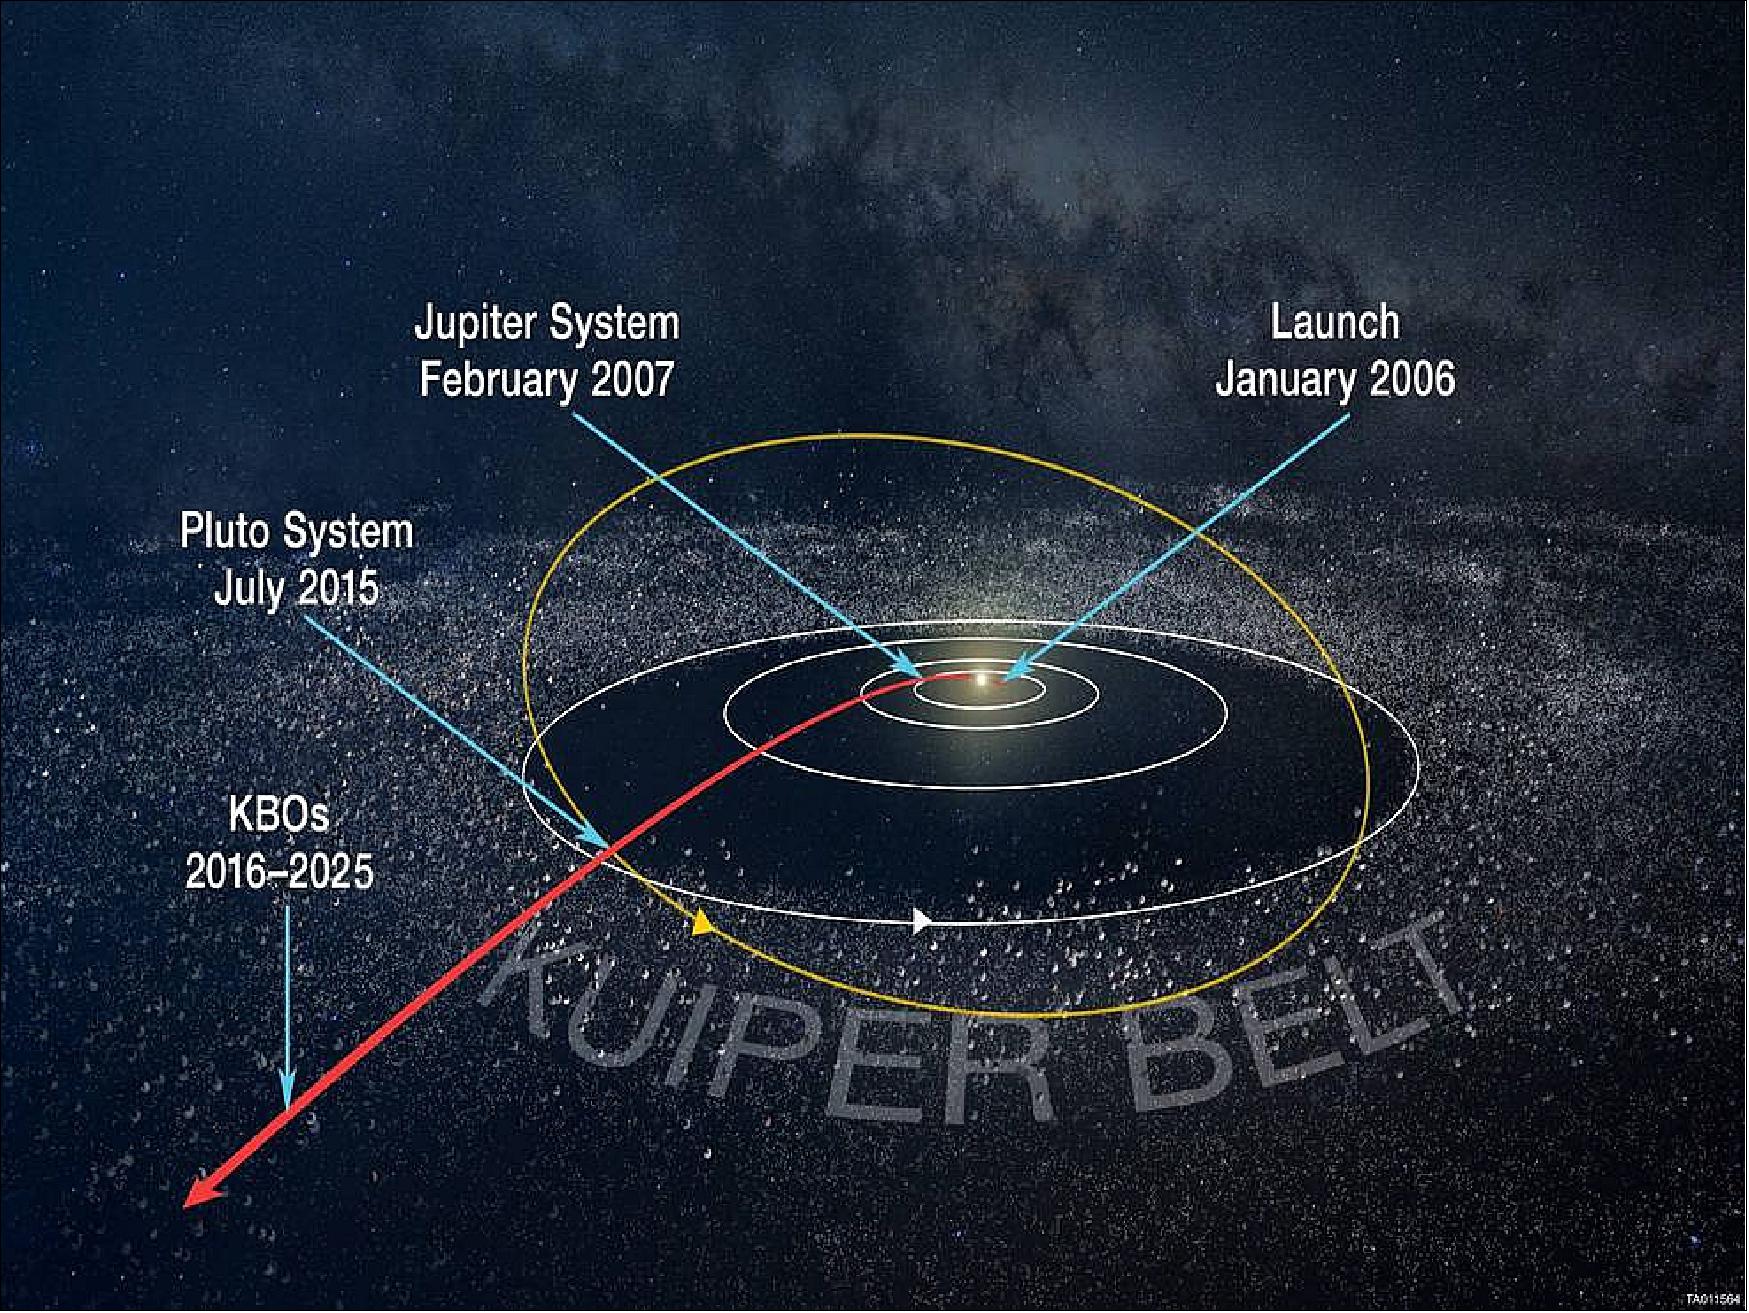 Figure 33: New Horizons Path of Exploration through the KBOs (Kuiper Belt Objects), image credit: NASA